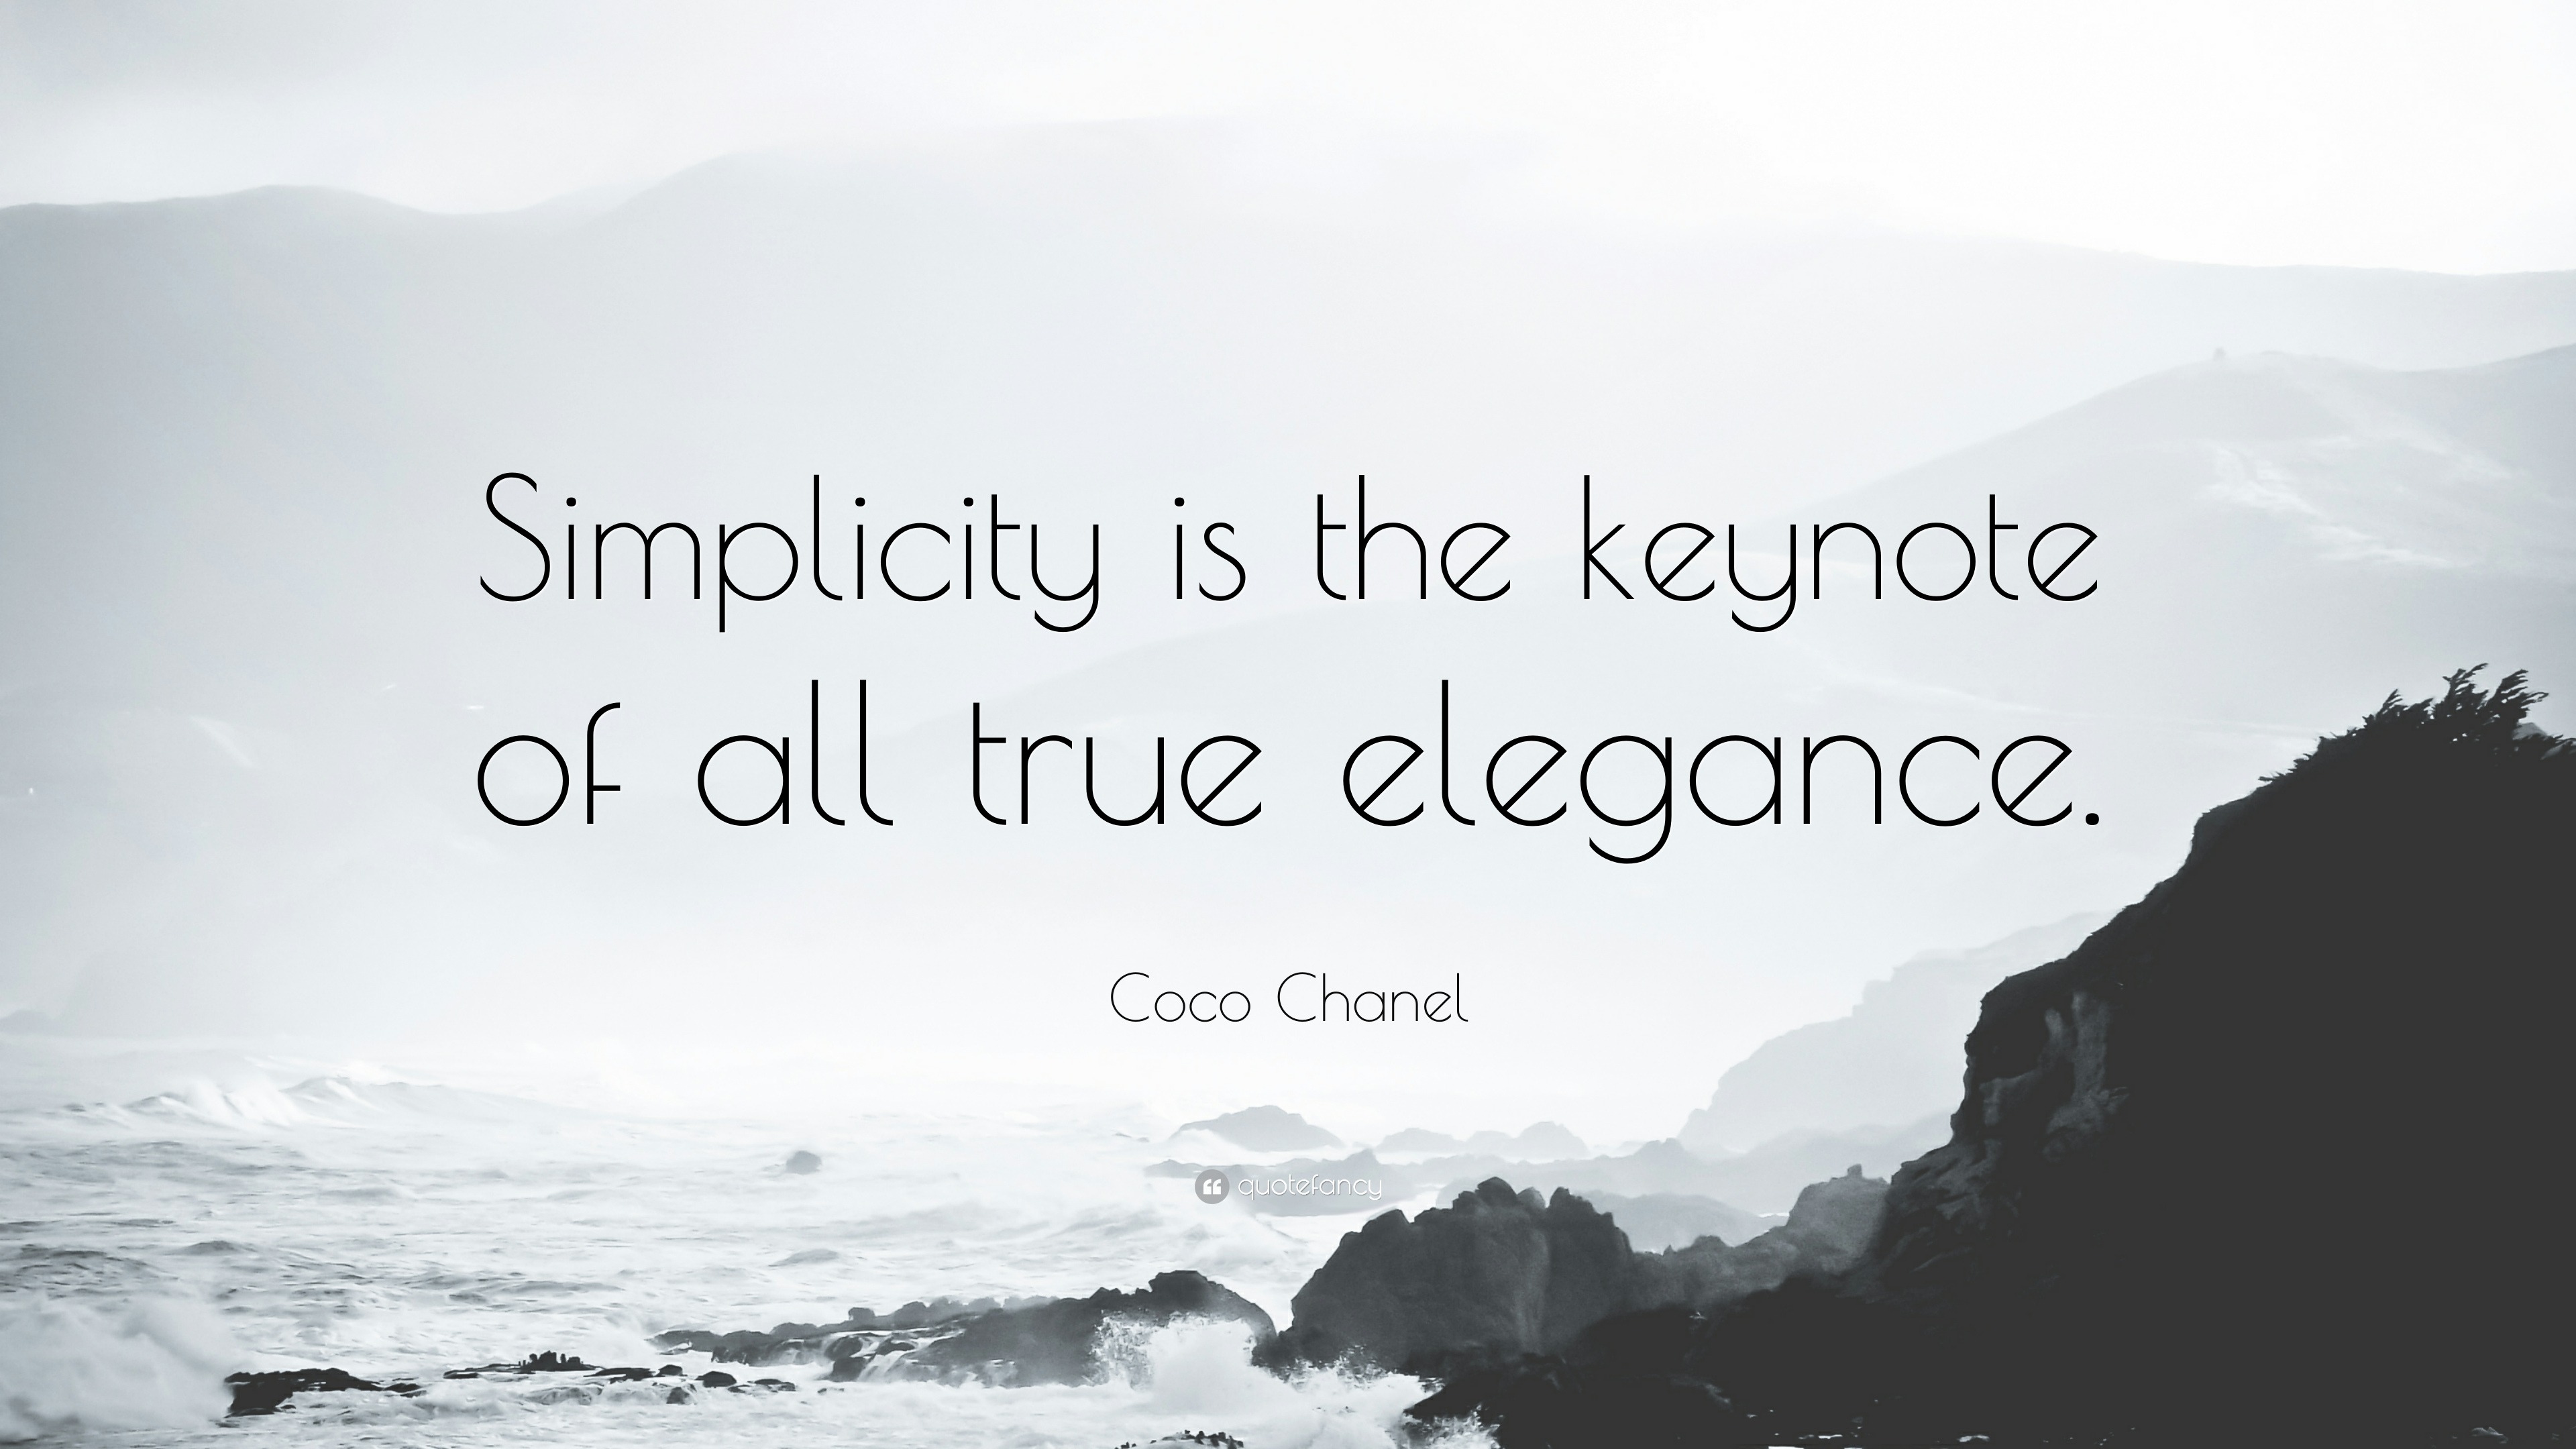 simplicity is the keynote of all true elegance